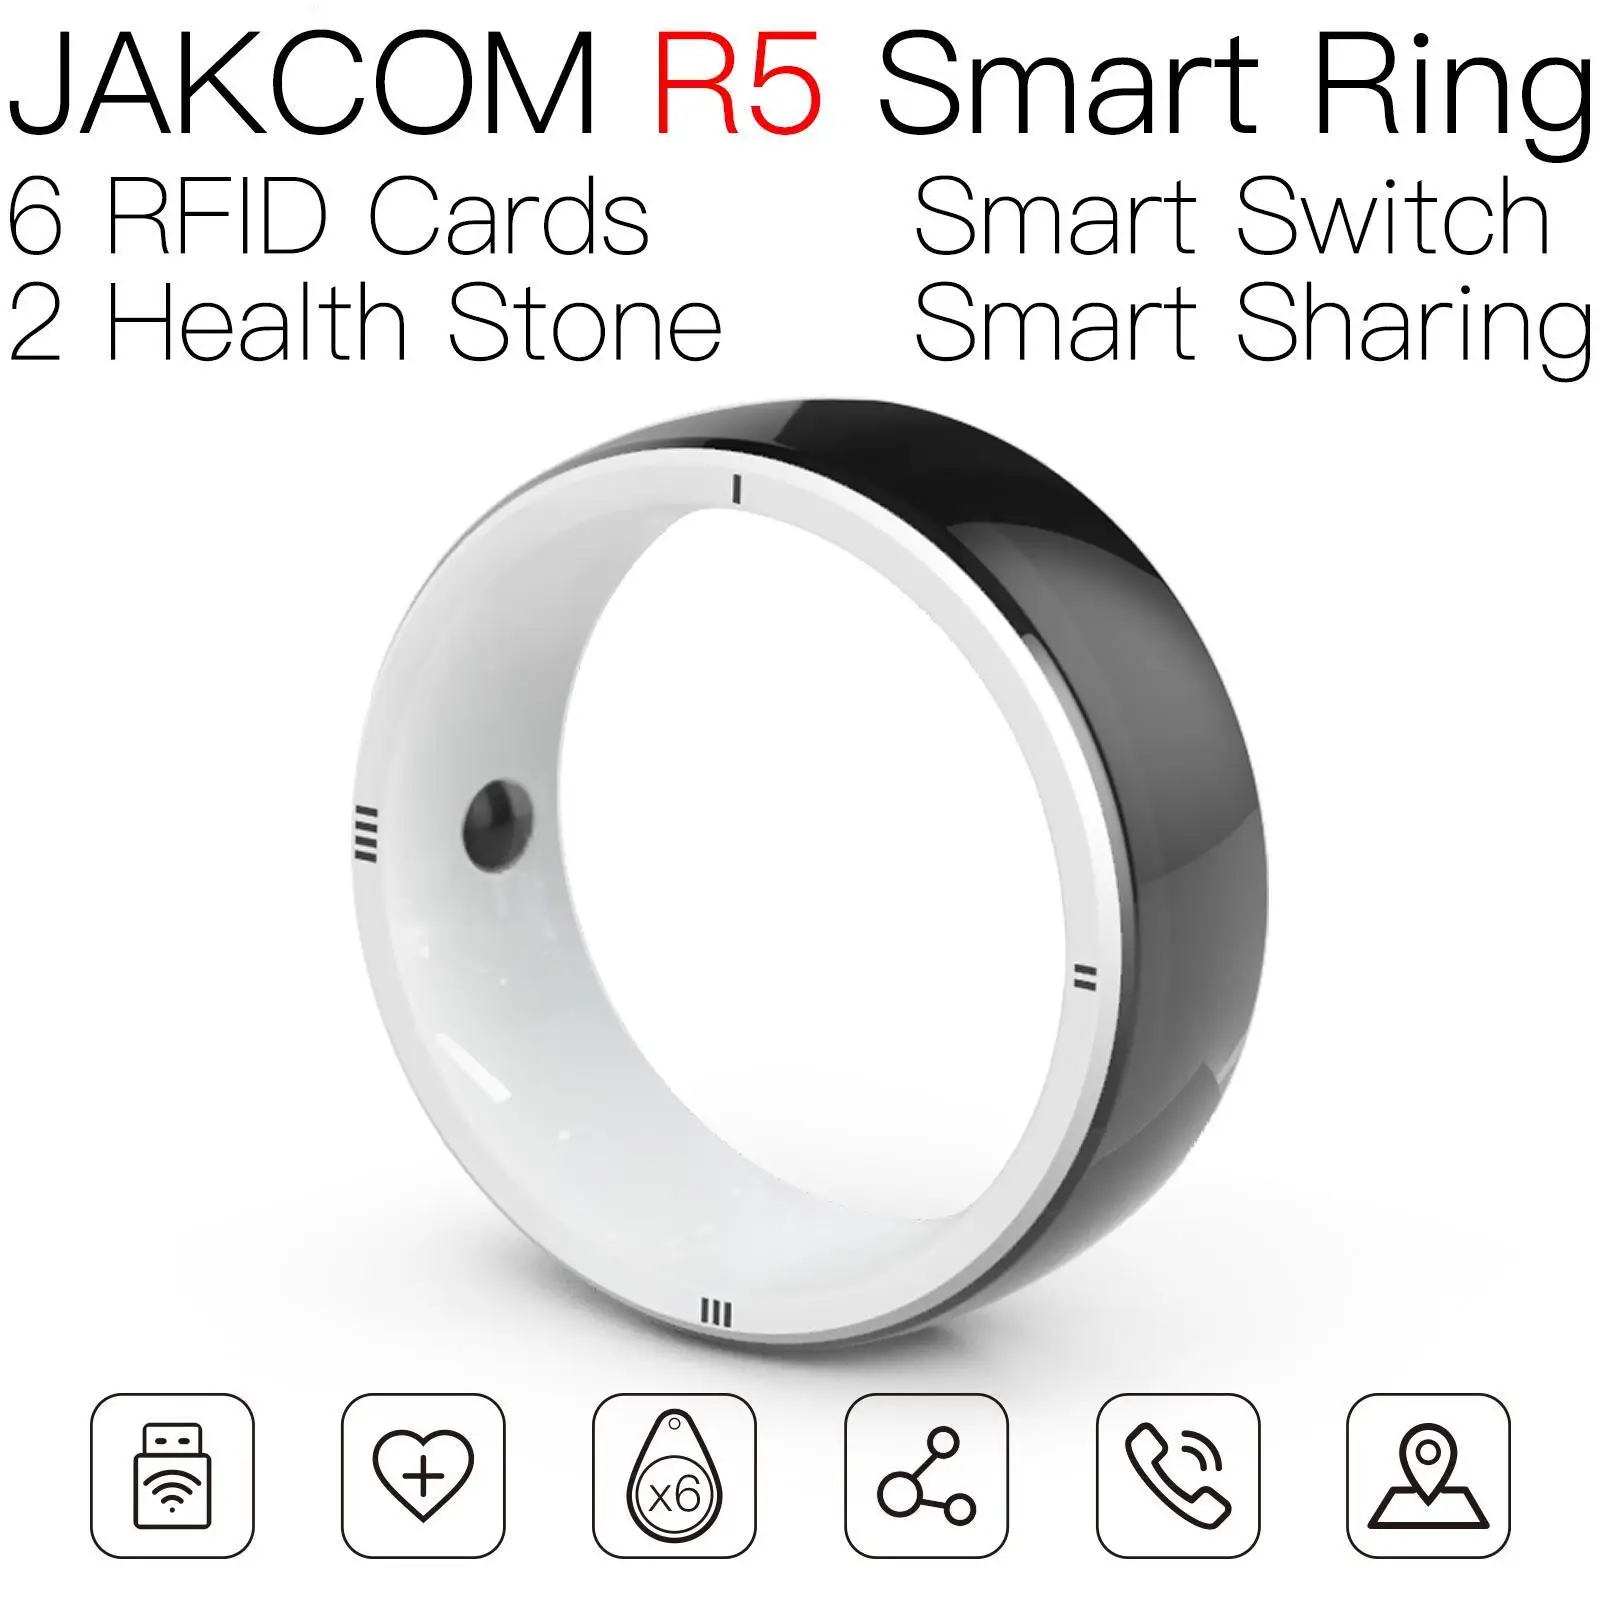 

JAKCOM R5 Smart Ring better than mct uid for 1 rfid nano chip badge modifiable vigik tag 125 t5577 mhz 100pcs amibo